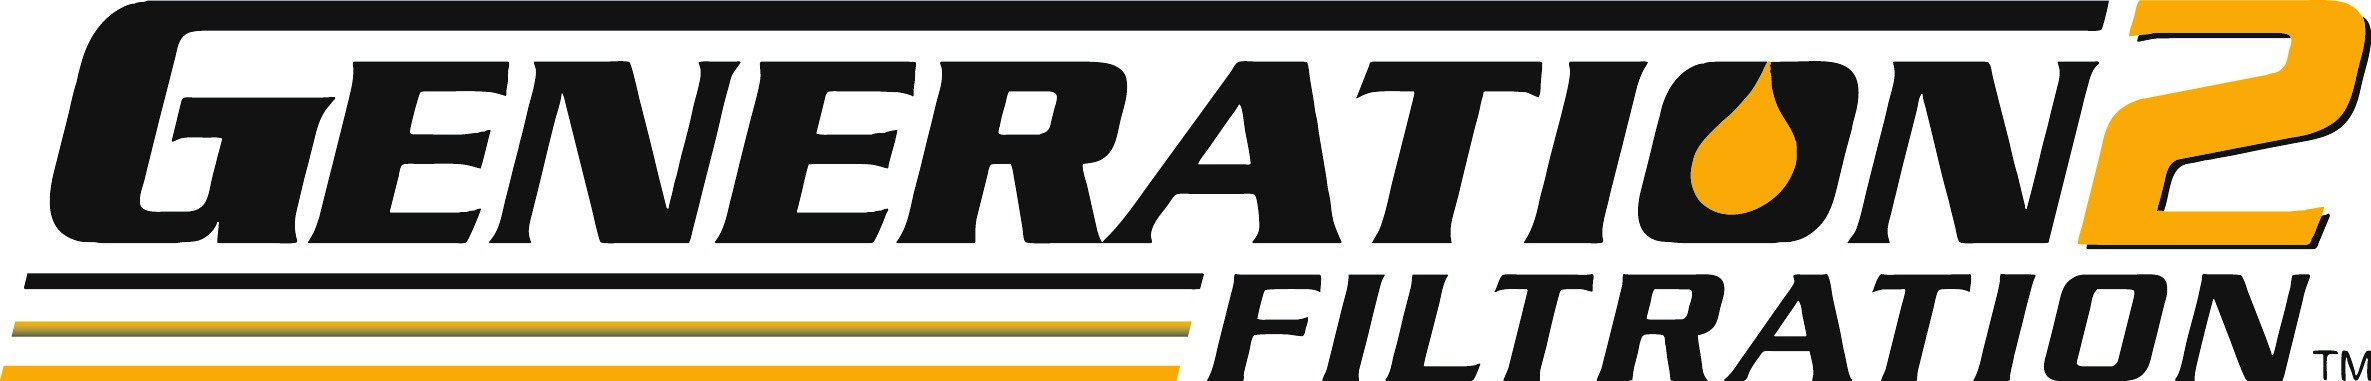 Generation 2 Filtration logo